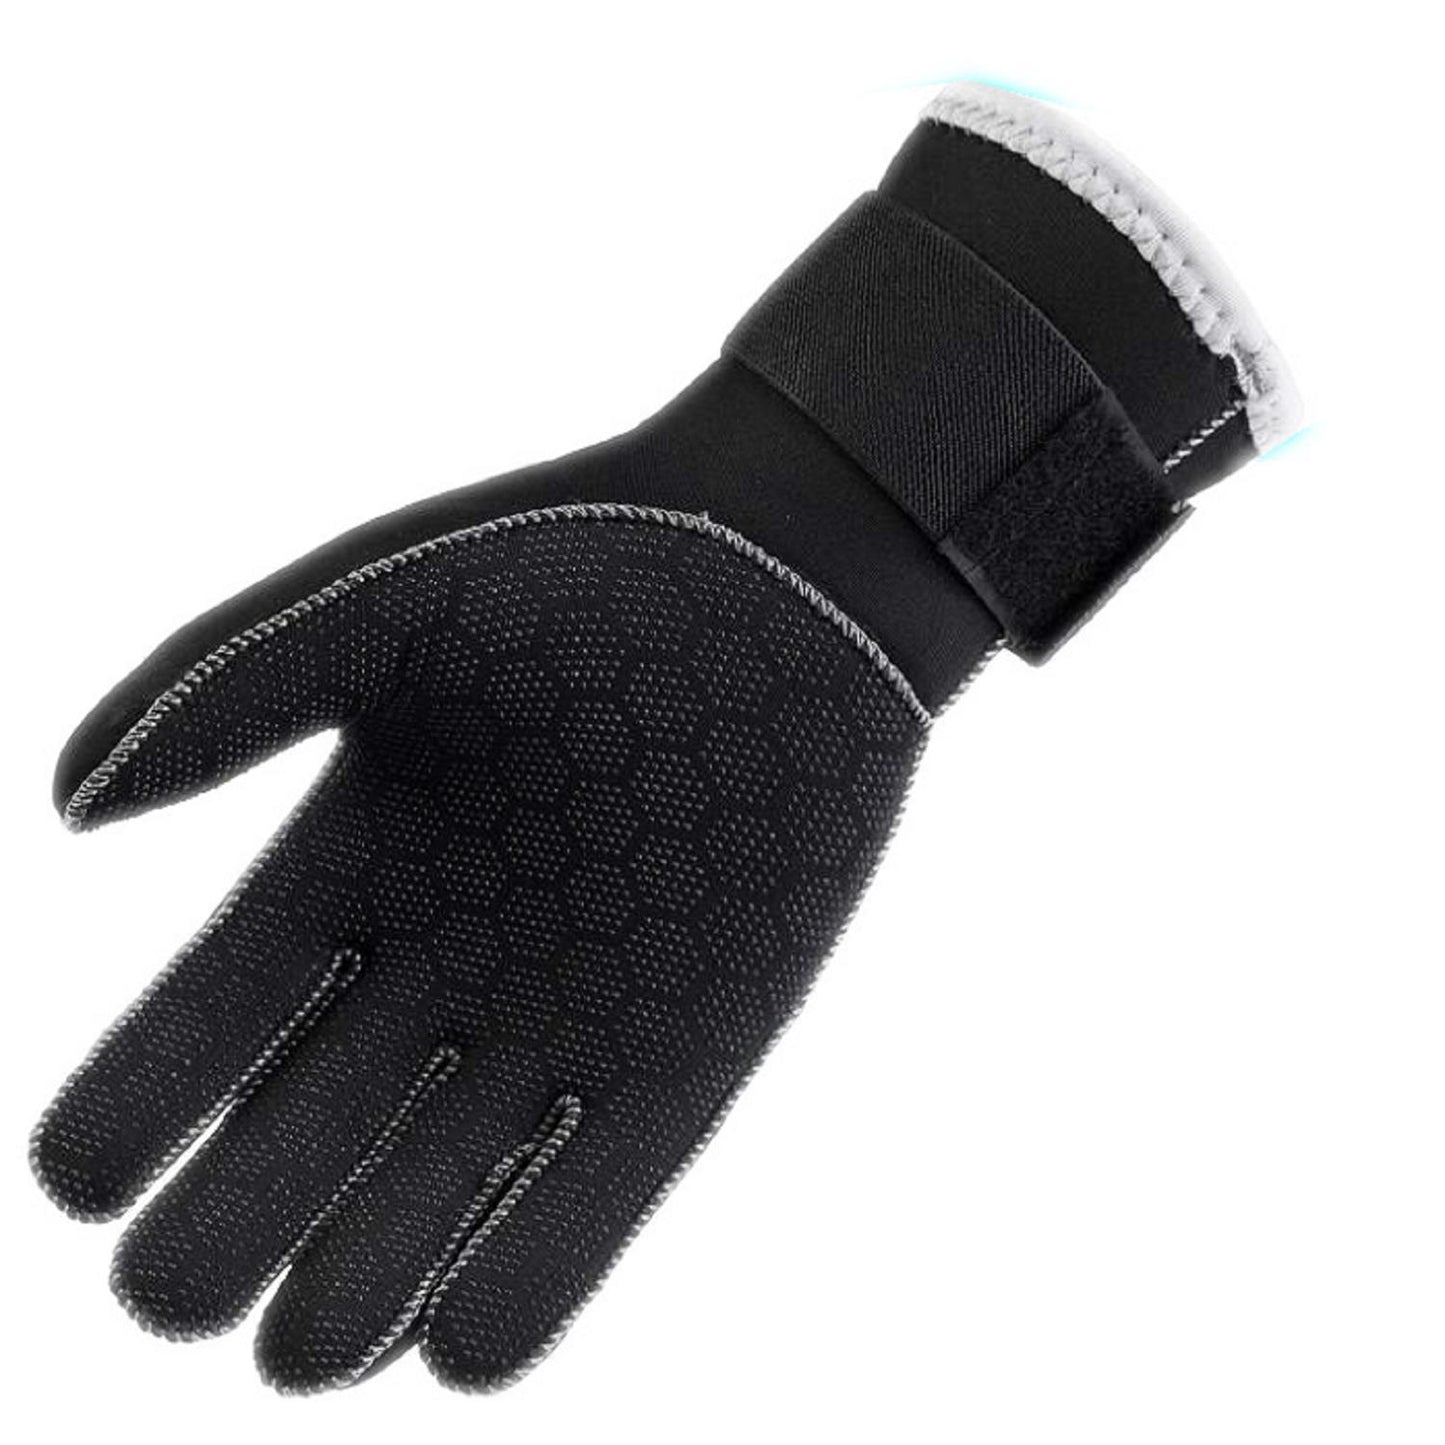 3MM Neoprene Swimming Gloves Snorkeling Diving Equipment Anti Scratch Keep Warm Spearfishing Scuba Kayaking Surf Hunting Gloves